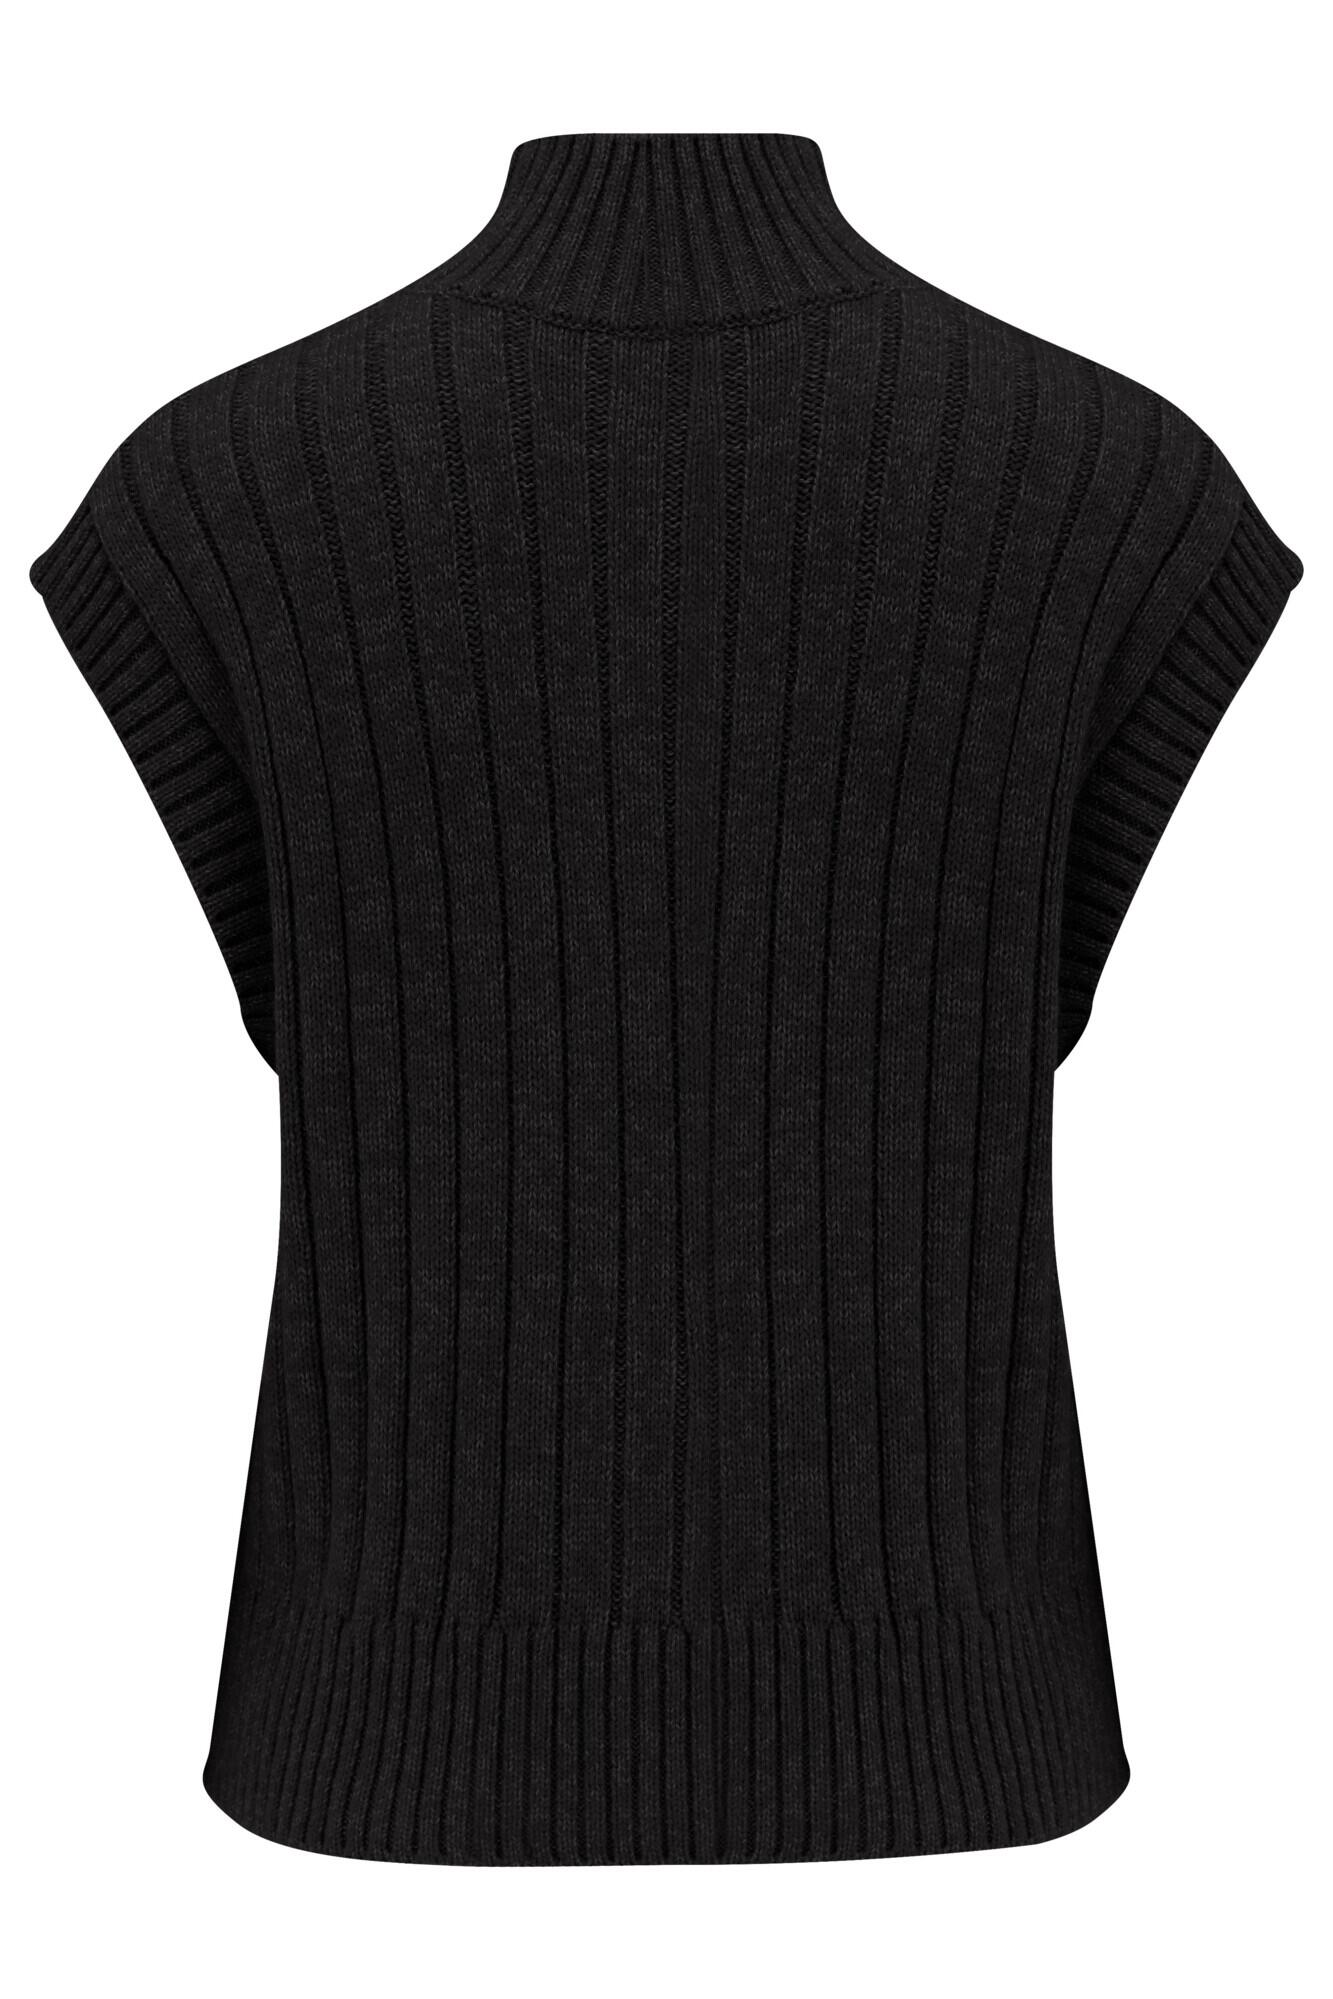 Black Longline Knitted Stretch Vest